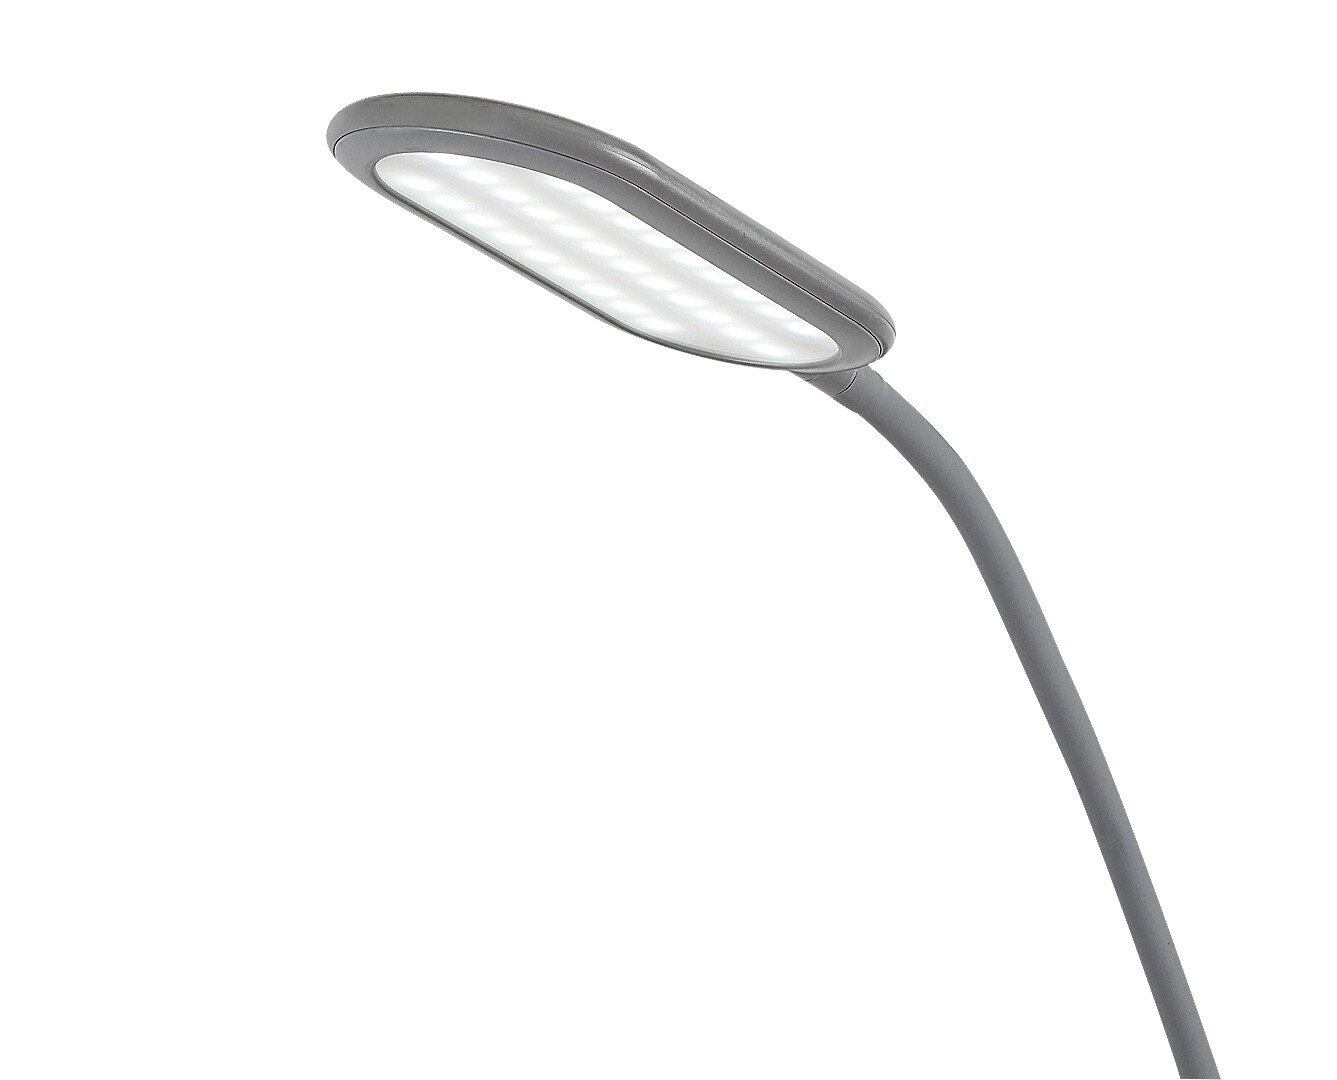 LED Stehlampe Adelmo 74010, 10W, 910lm, Metall, grau-weiß, Modern, dimmbar, 140cm